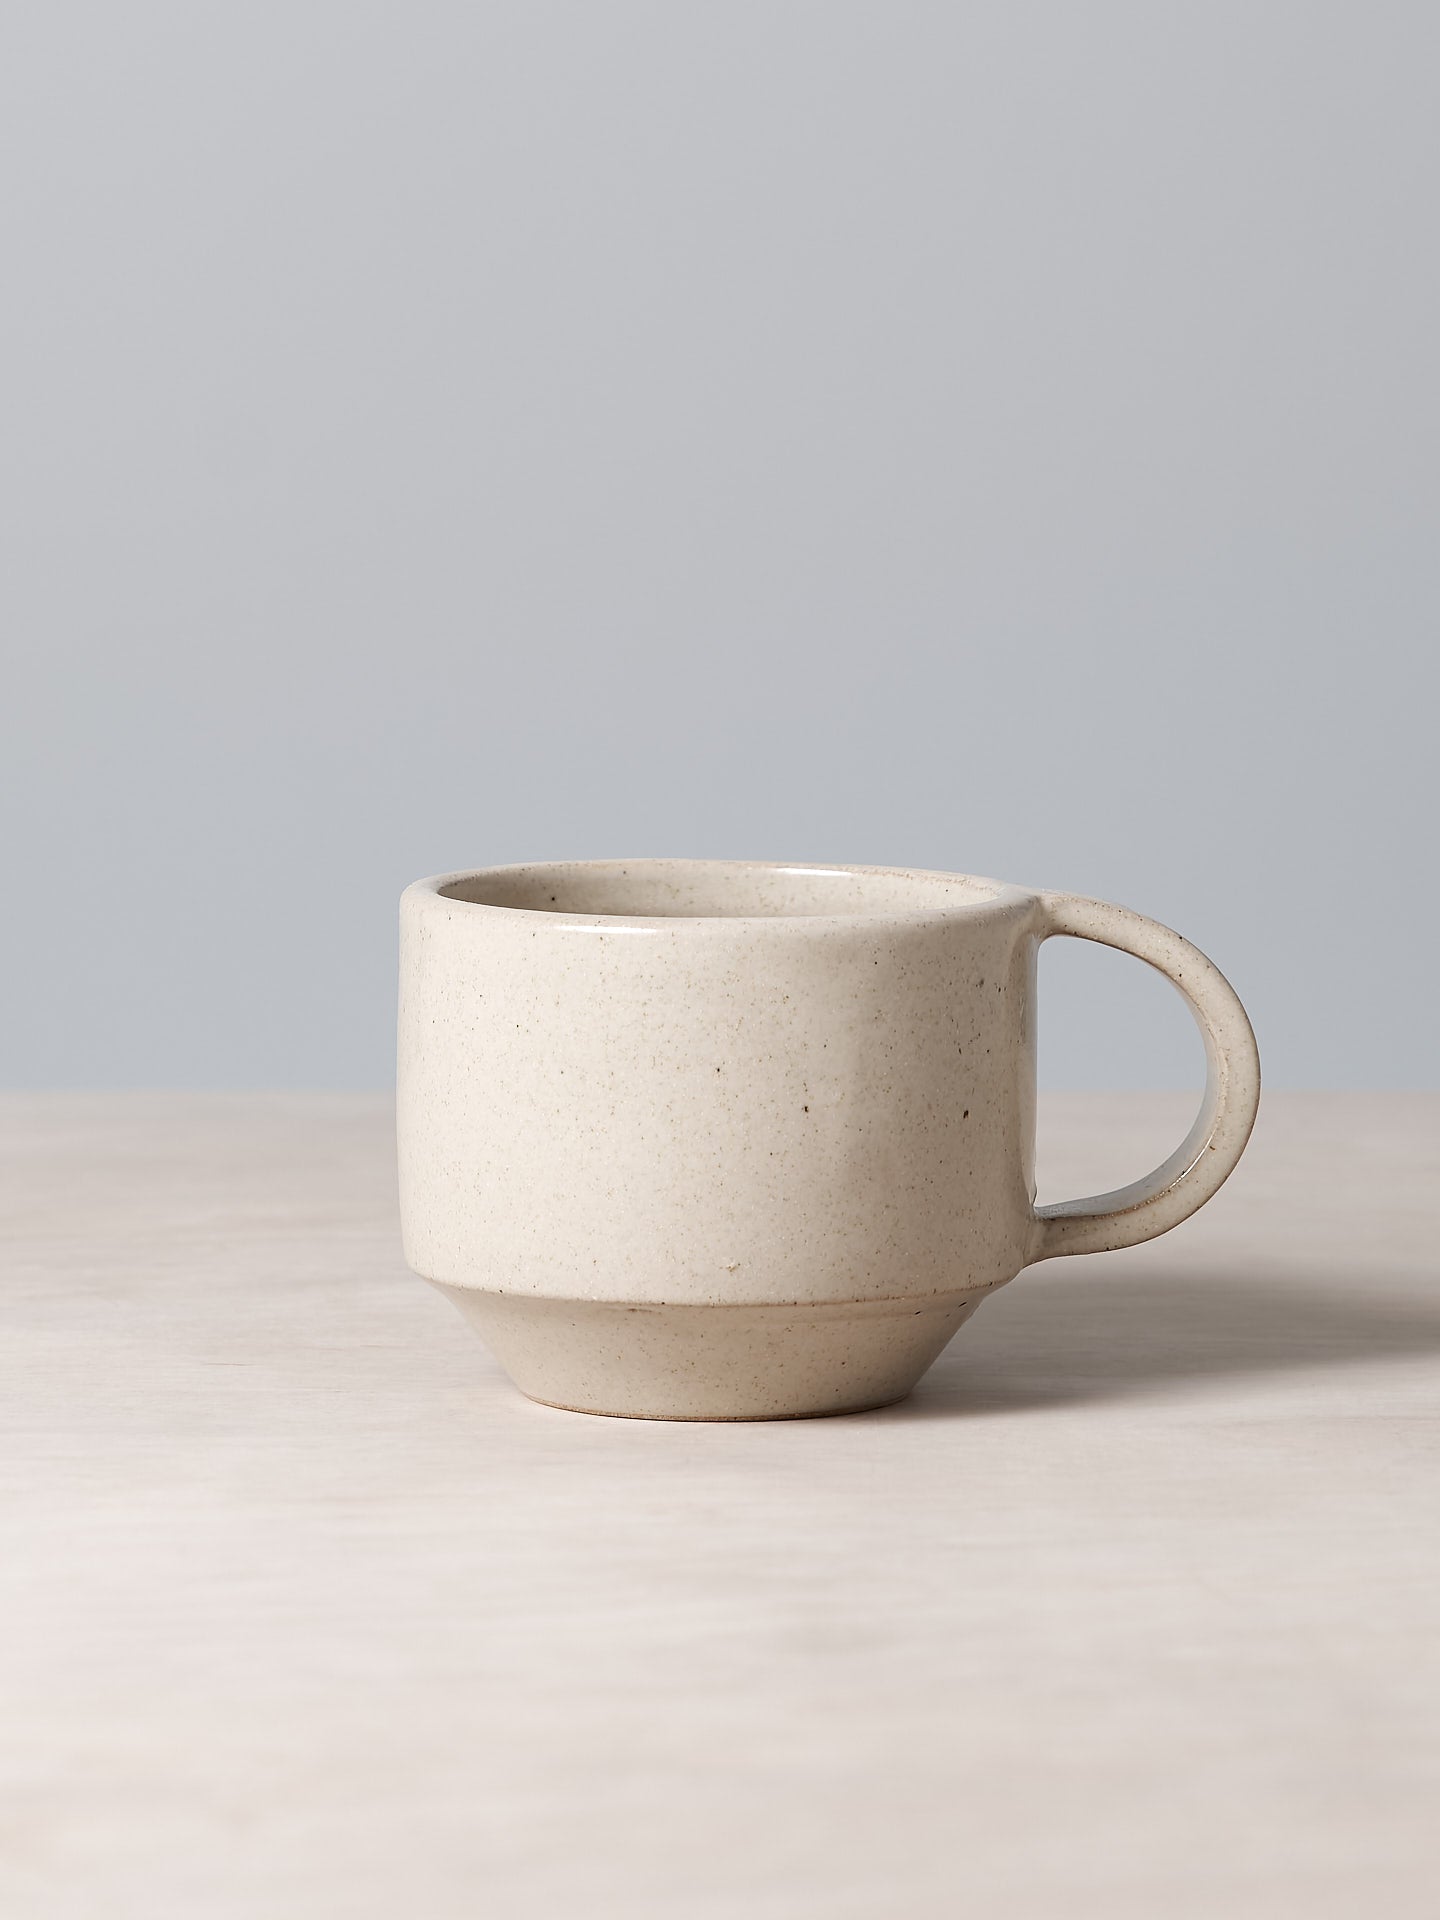 A handmade Richard Beauchamp beige coloured glaze ceramic C-handled stacking mug sitting on top of a table.